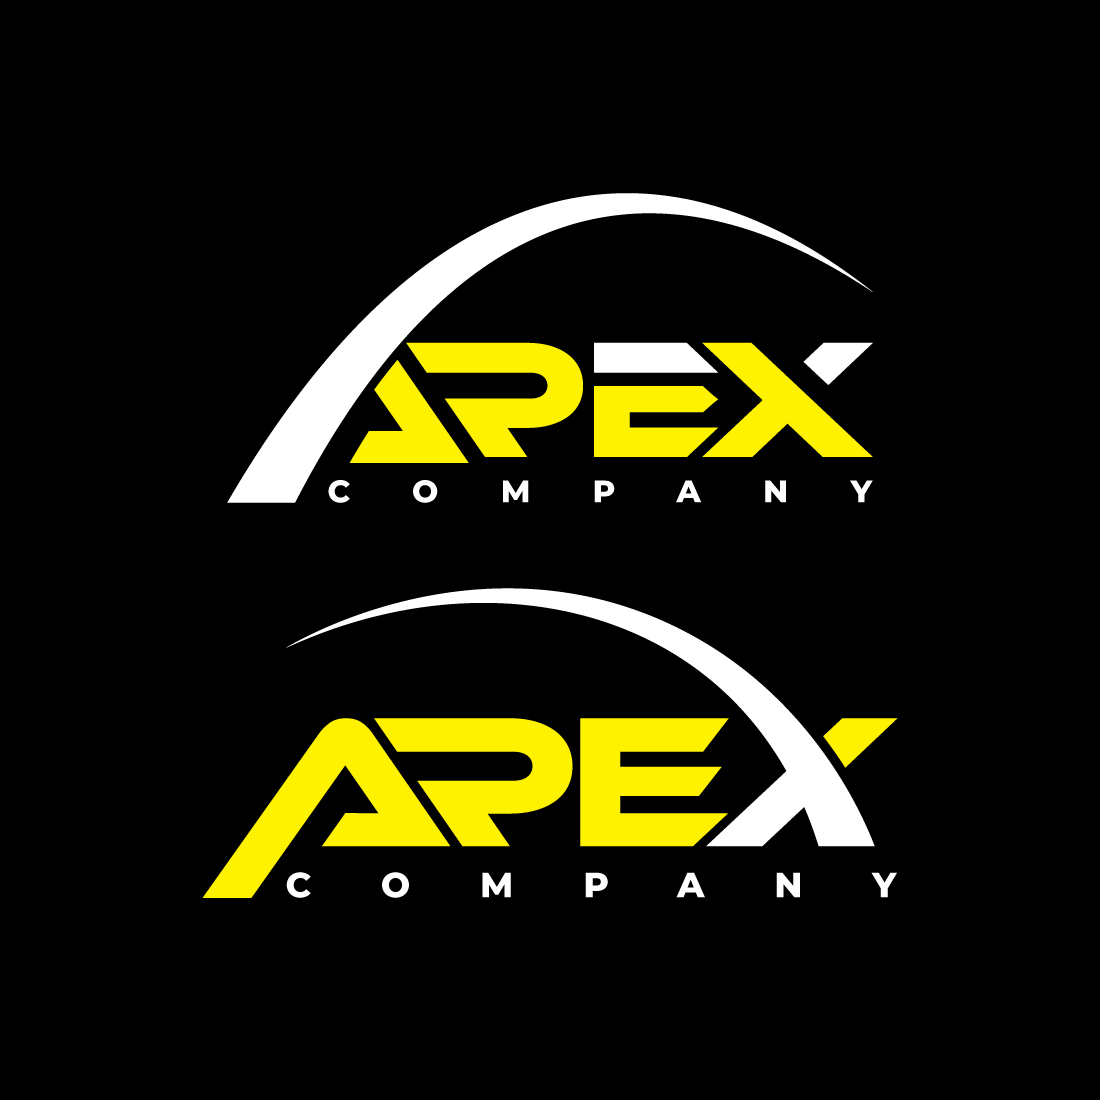 Apex creative letter branding logo design Concept preview image.